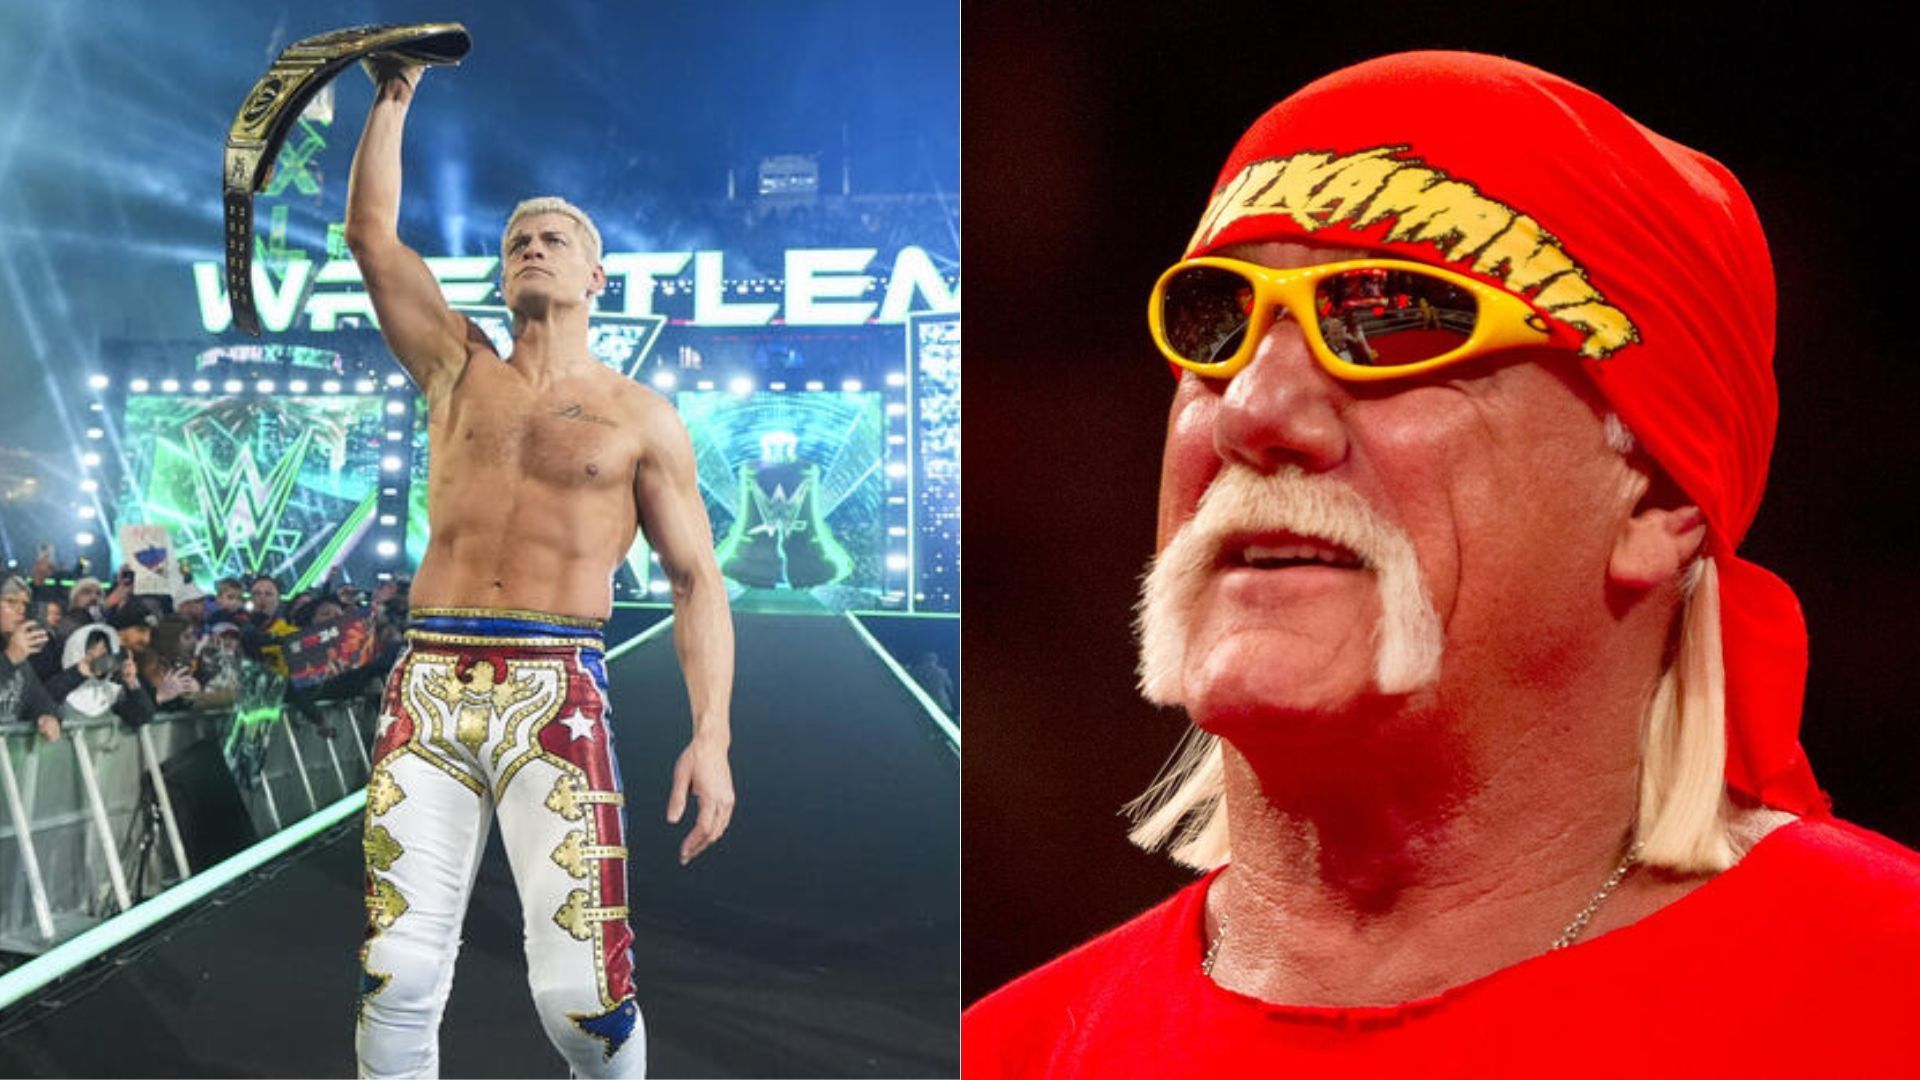 Cody Rhodes (left); Hulk Hogan (right) [Image Credit: wwe.com]